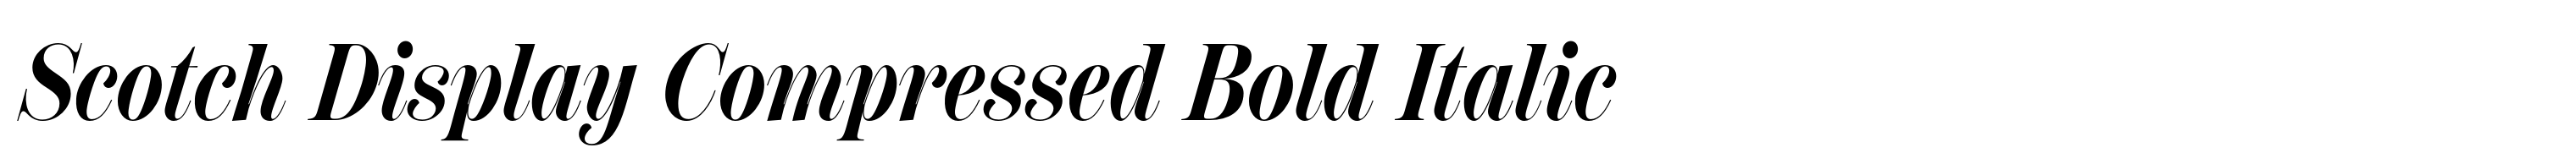 Scotch Display Compressed Bold Italic